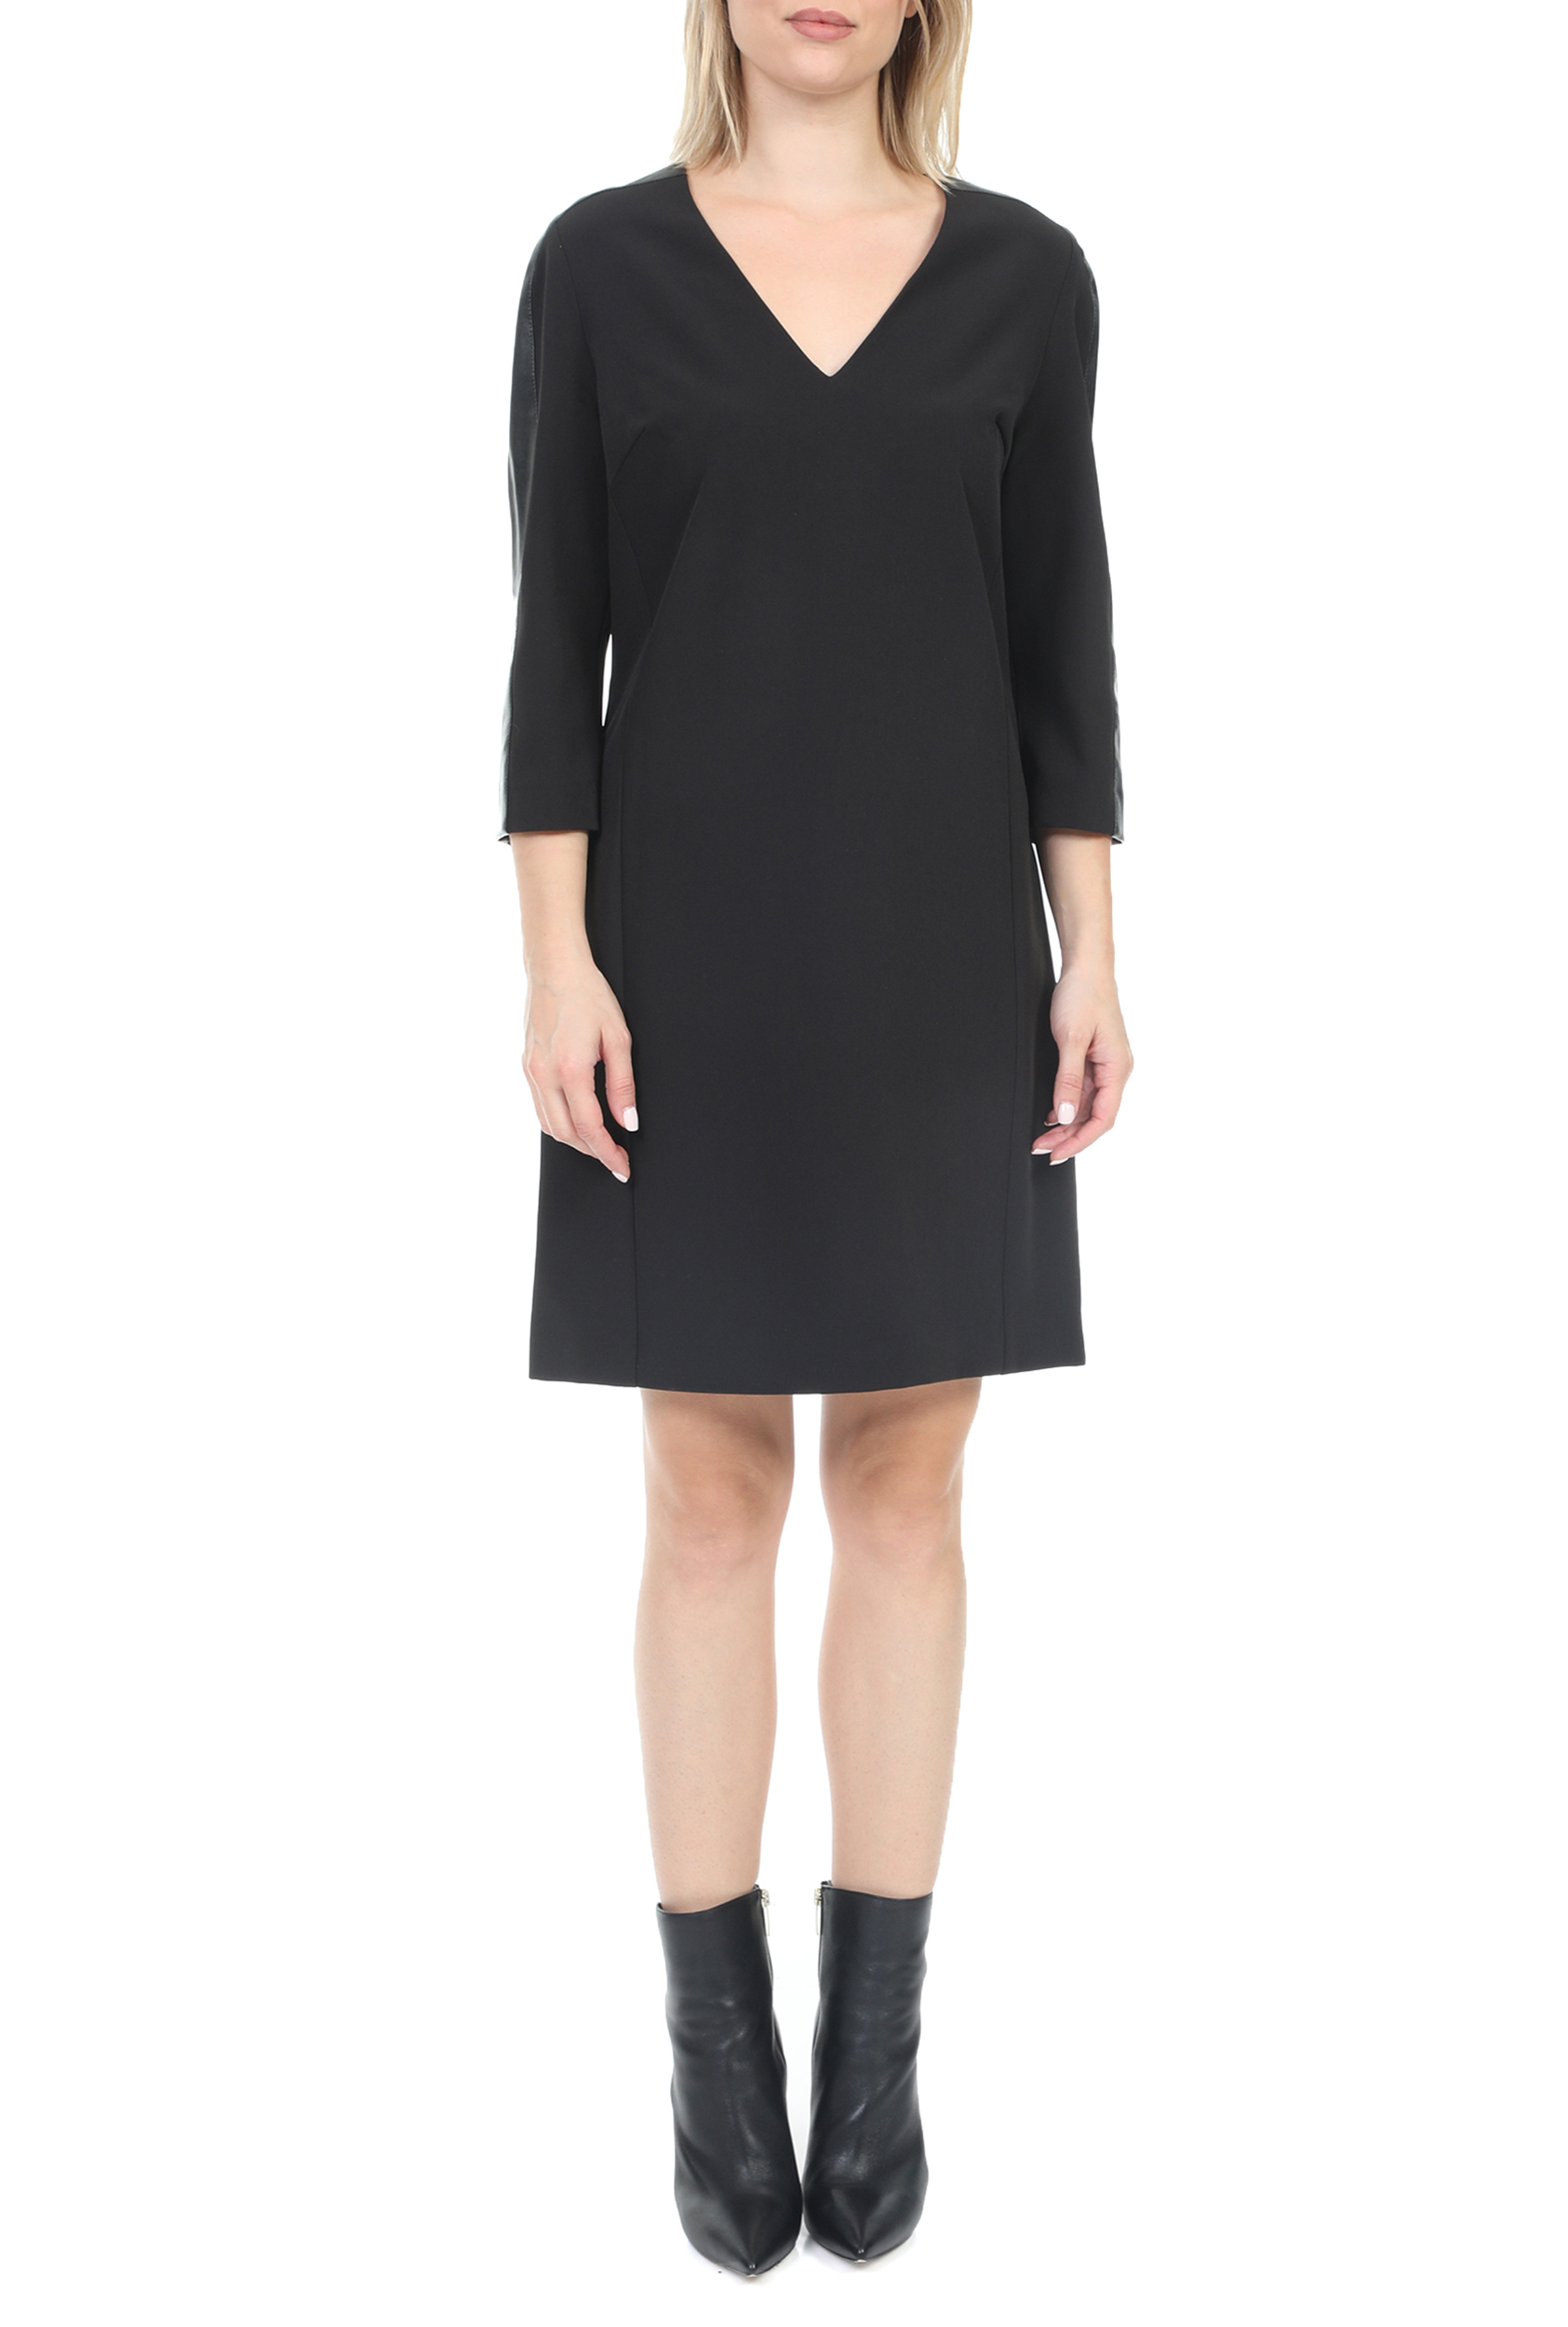 KOCCA – Γυναικειο mini φορεμα KOCCA HORIBA μαυρο